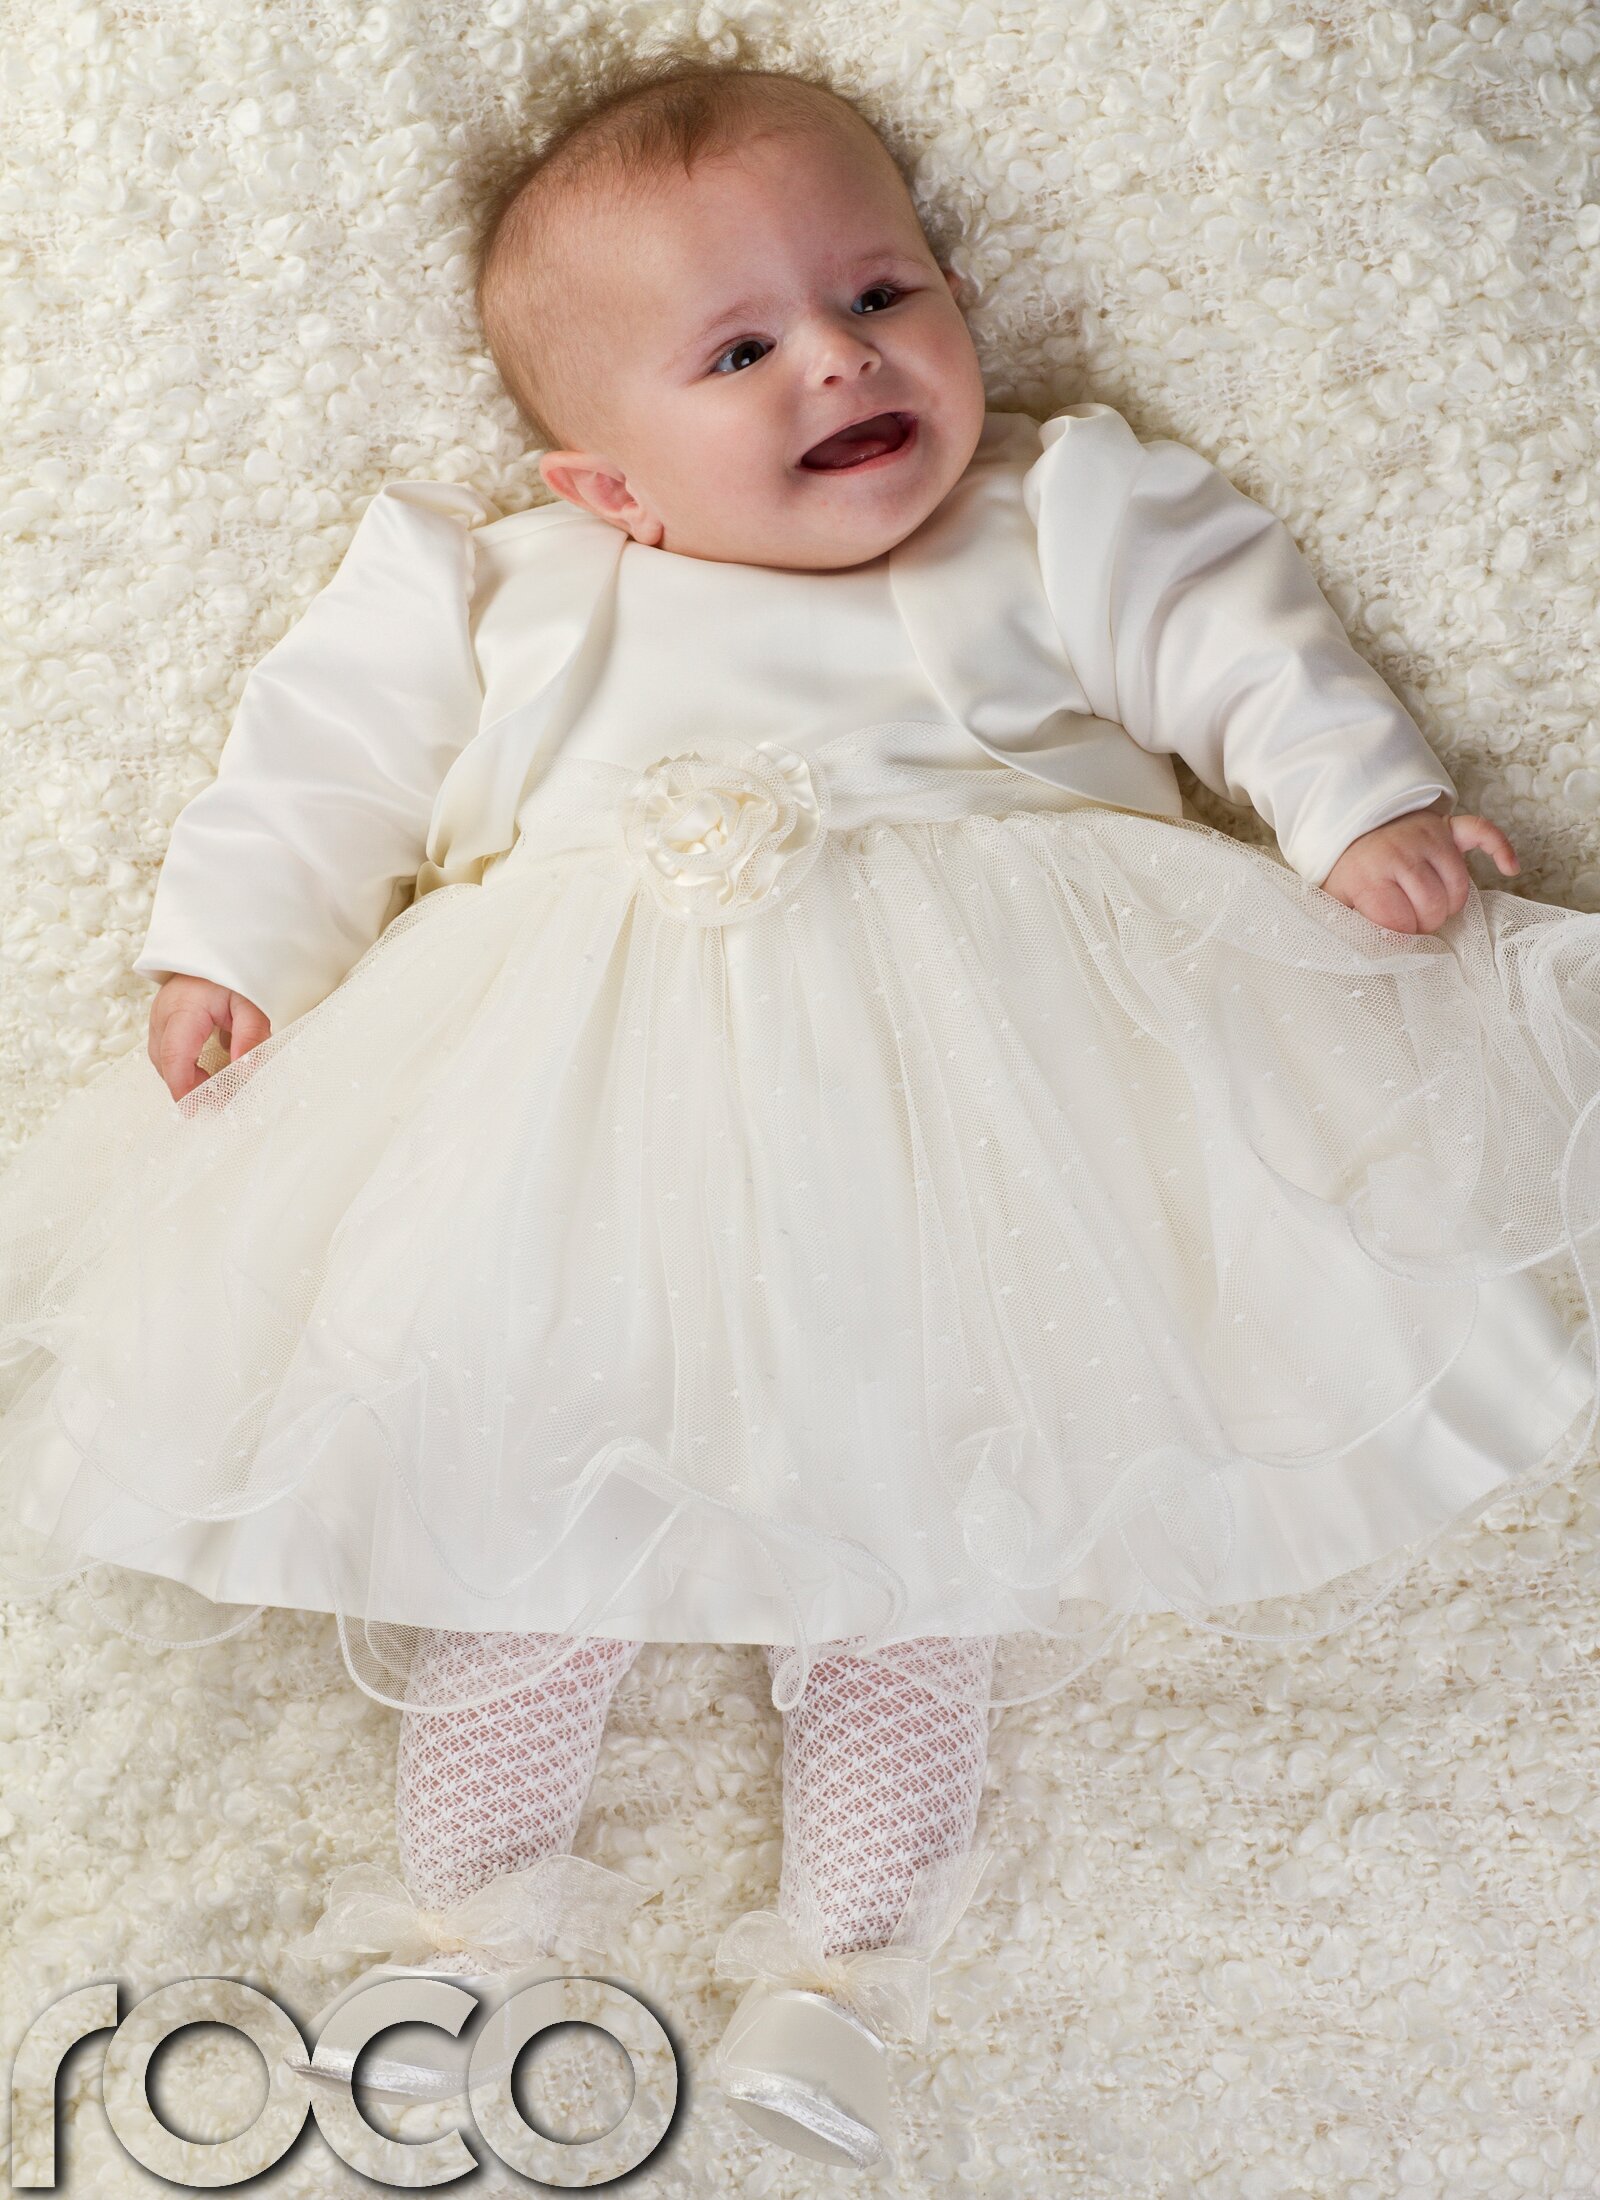 Wedding dresses for baby girl Photo - 5